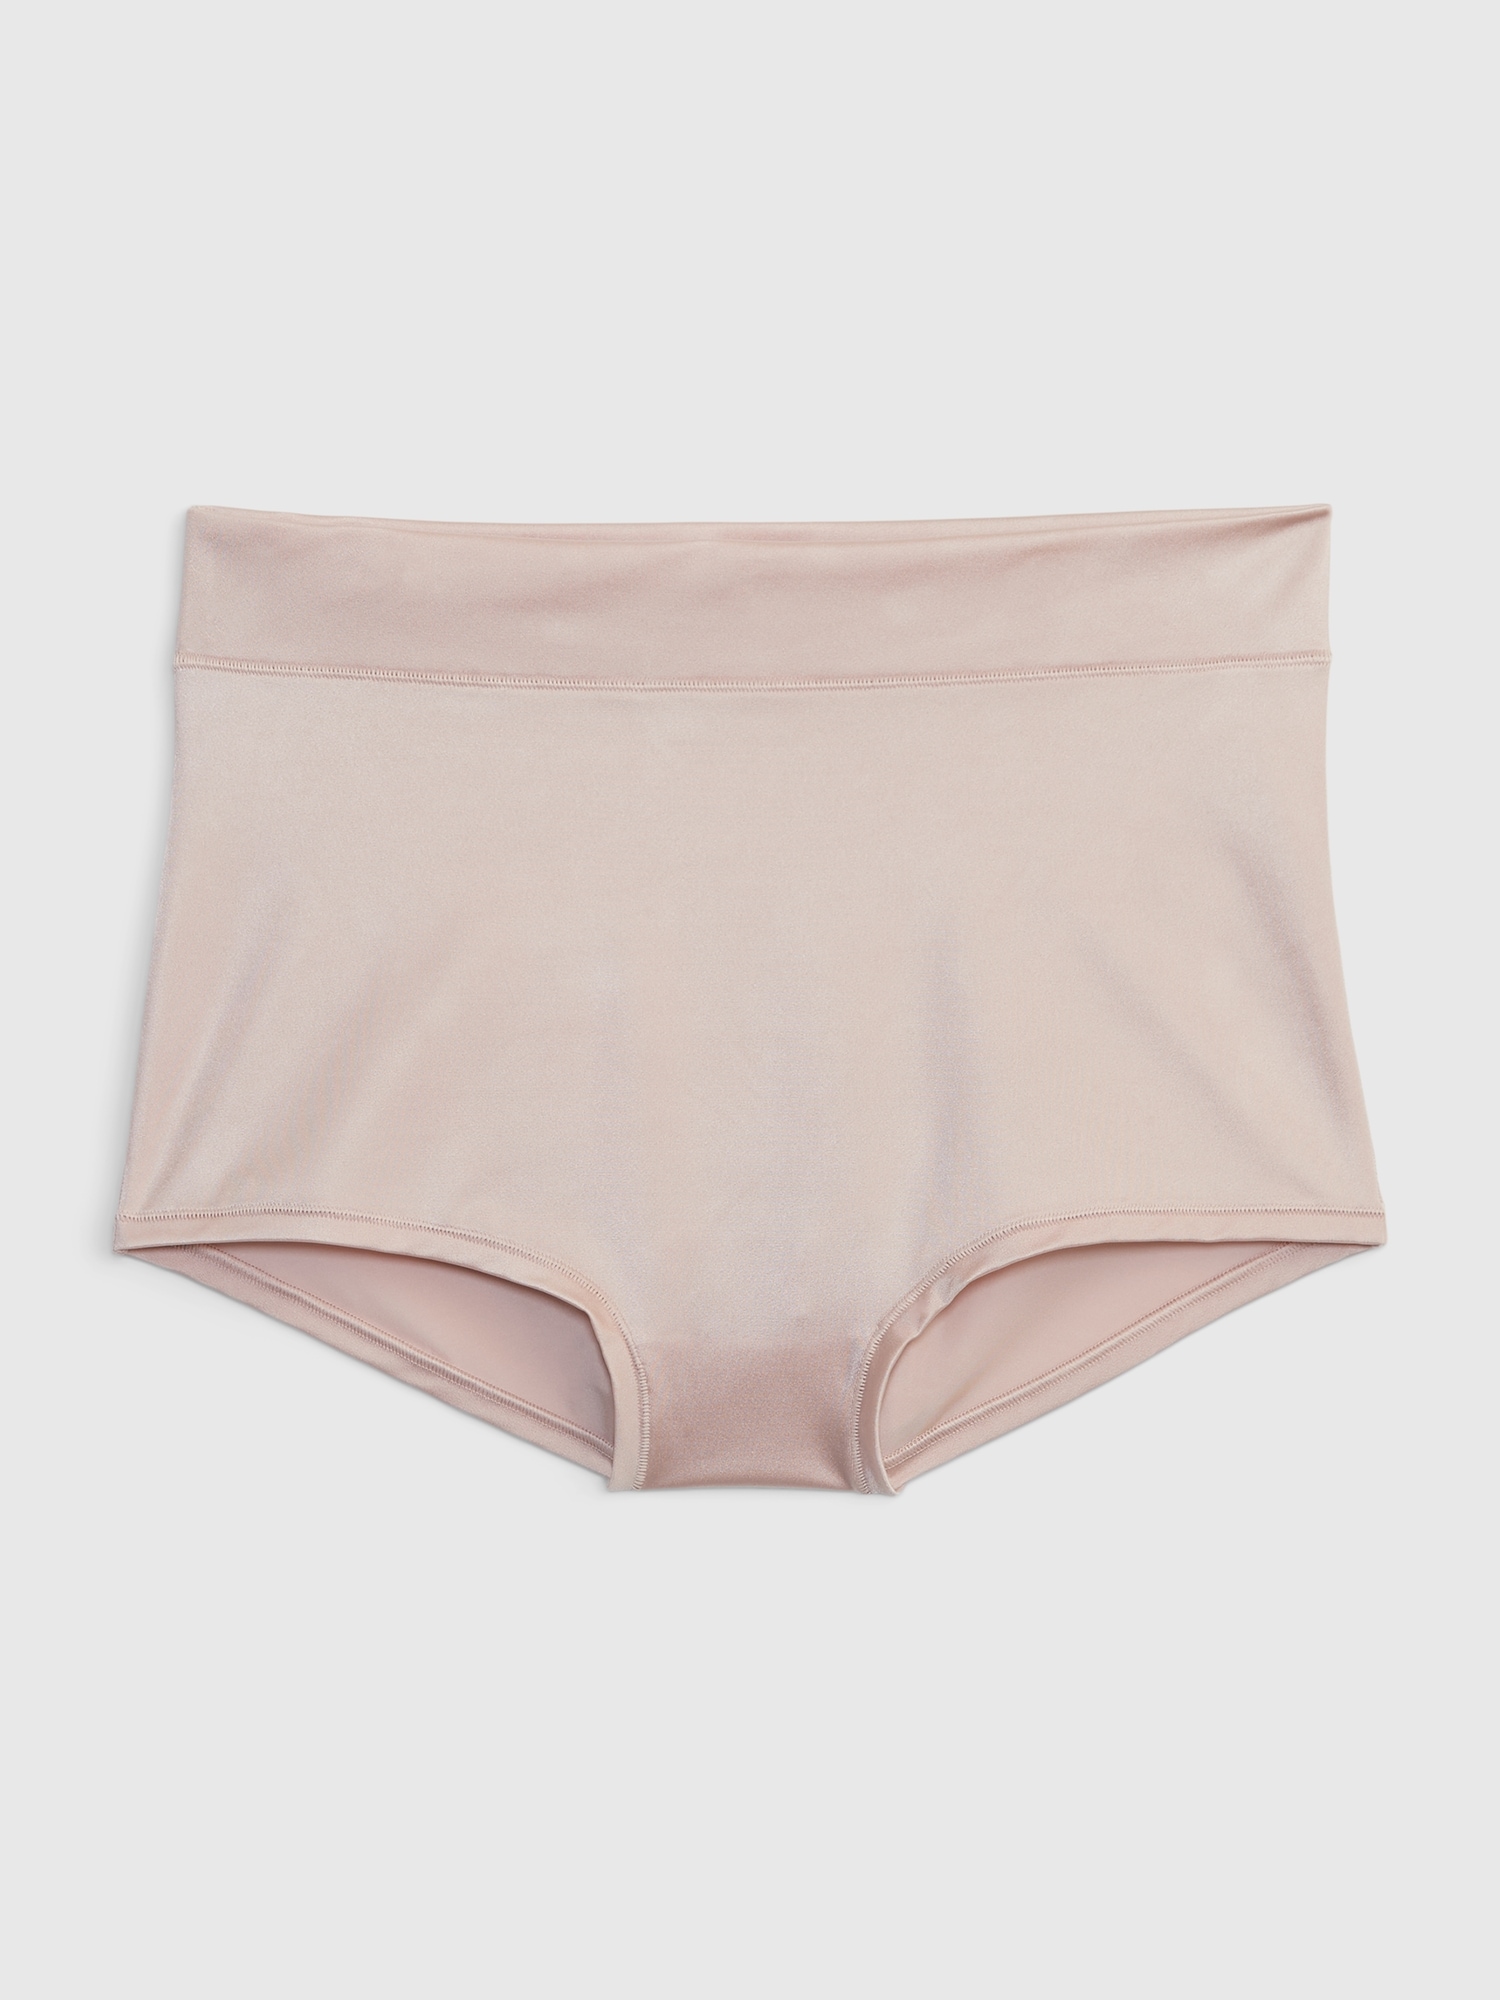 GAP Women's 3-Pack No Show Bikini Underpants Palestine